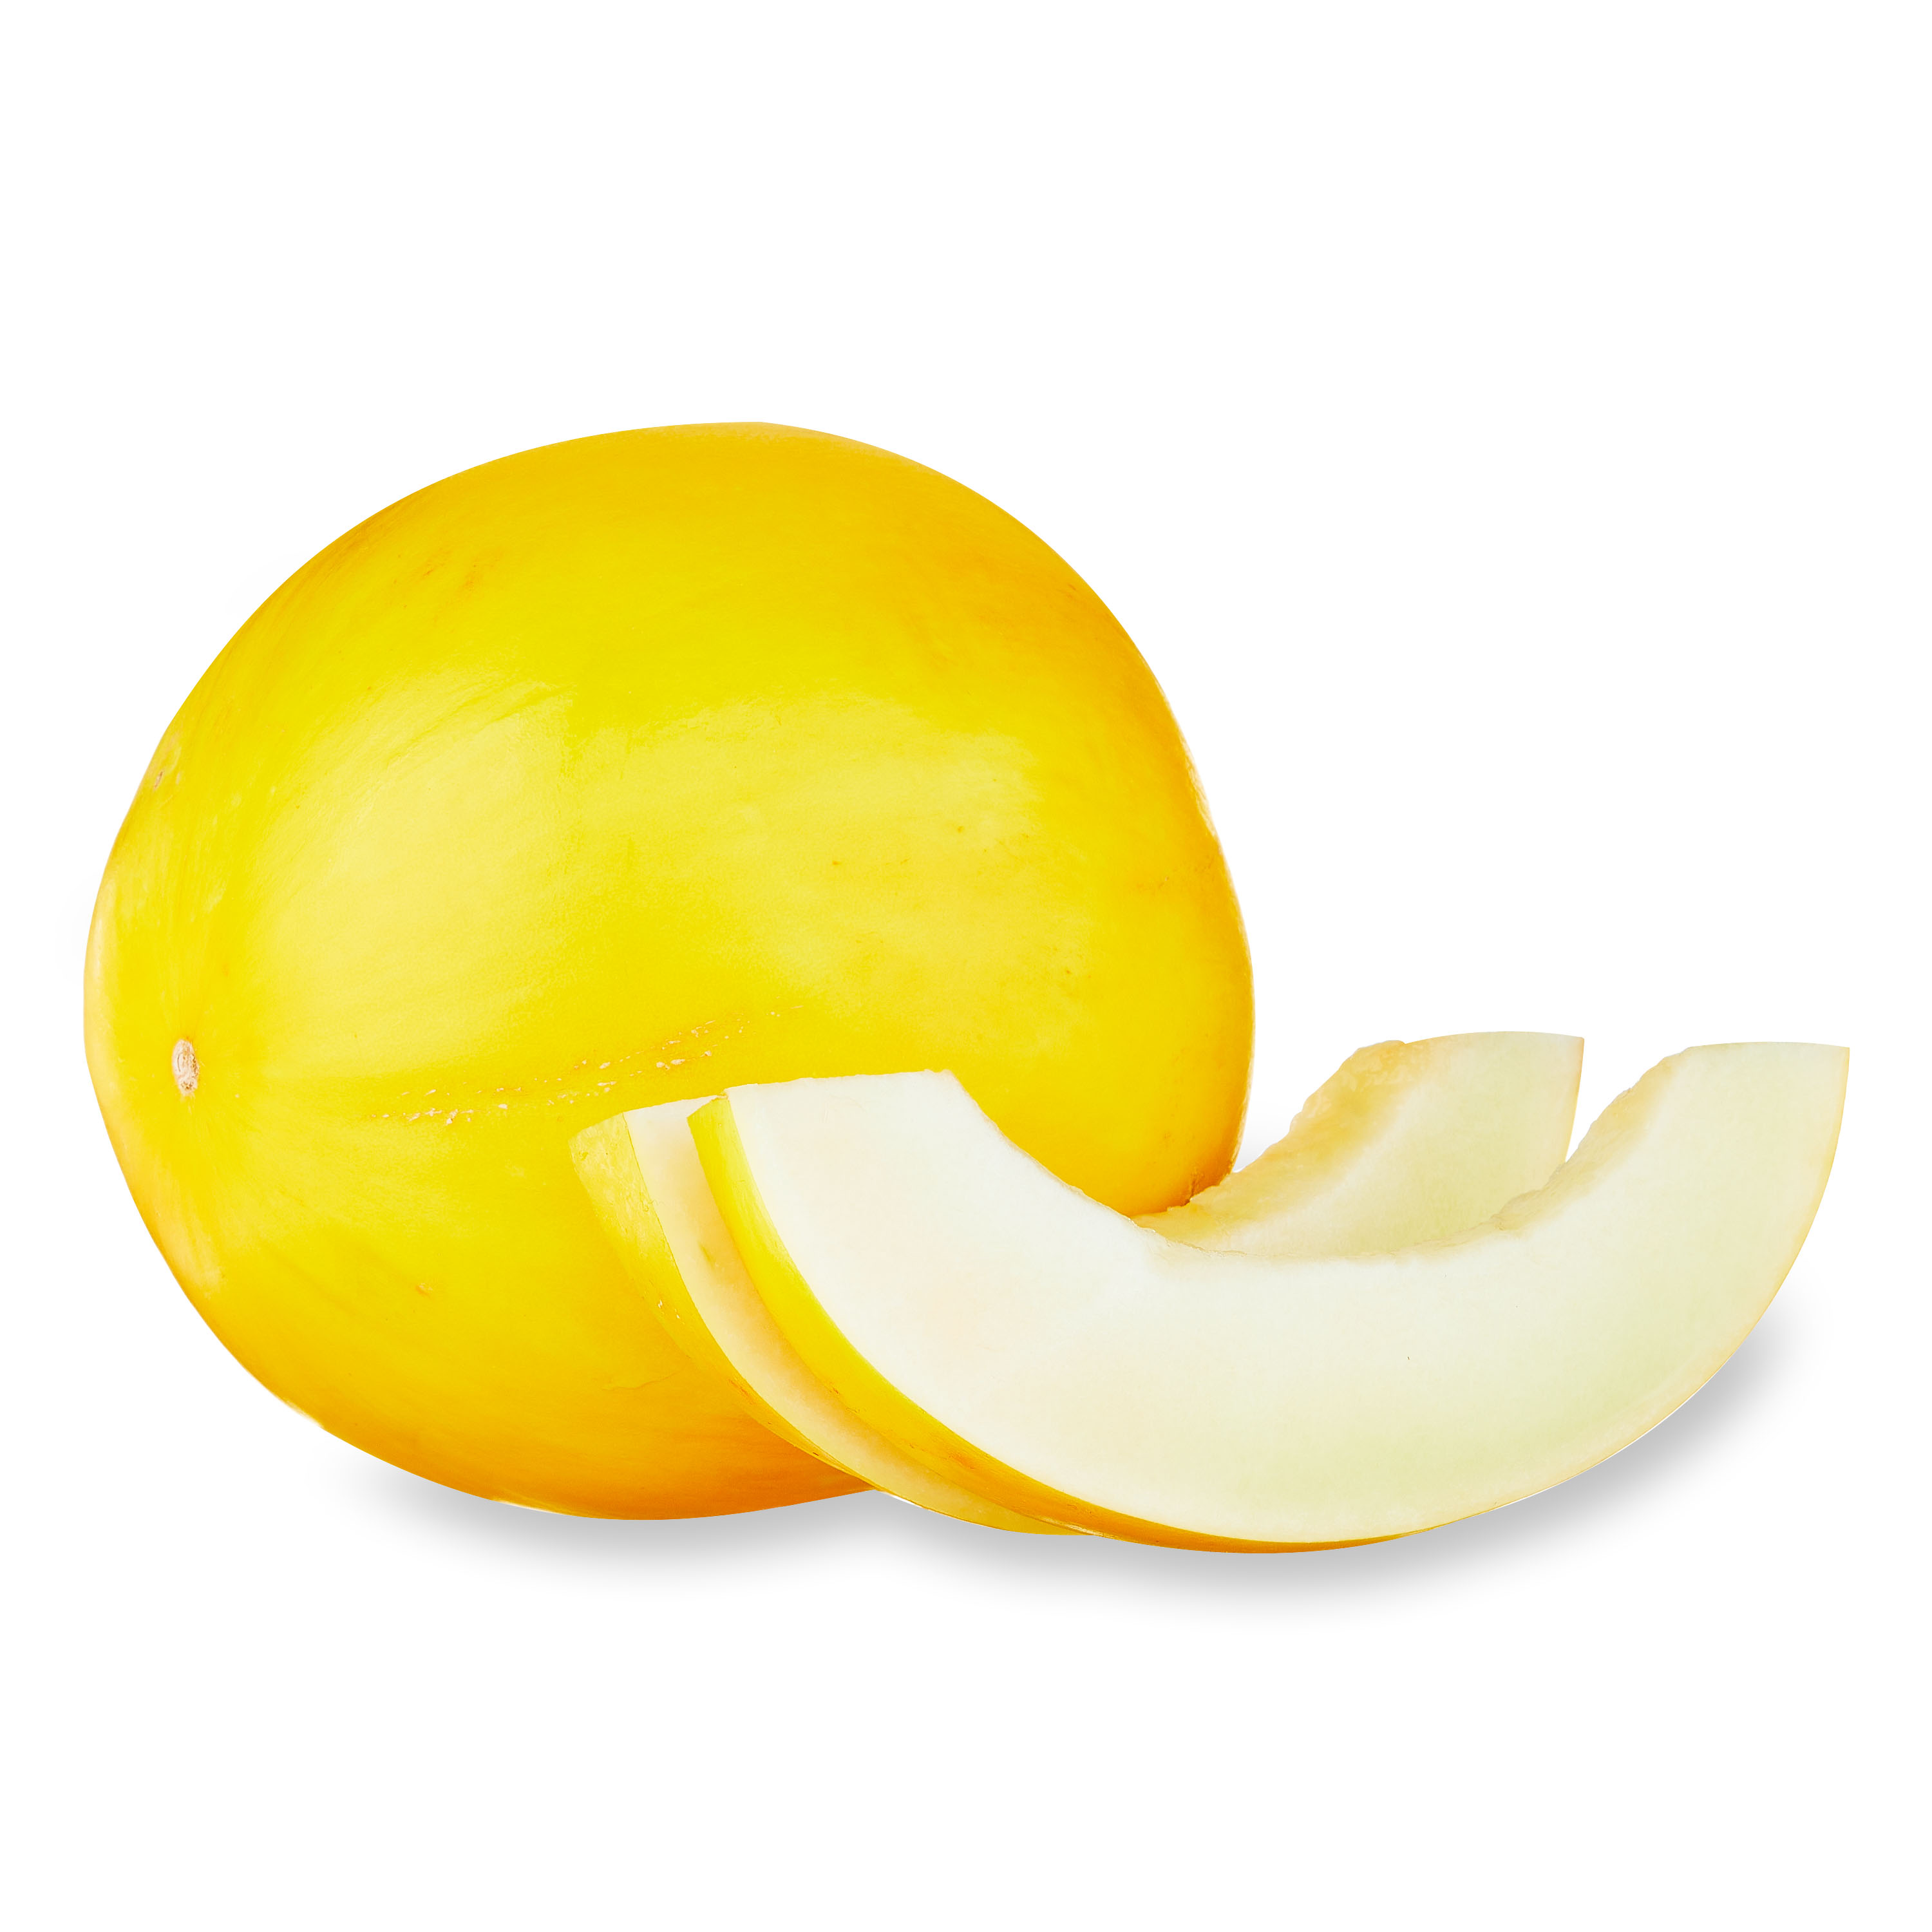 Fresh Golden Melon, Each - image 1 of 6